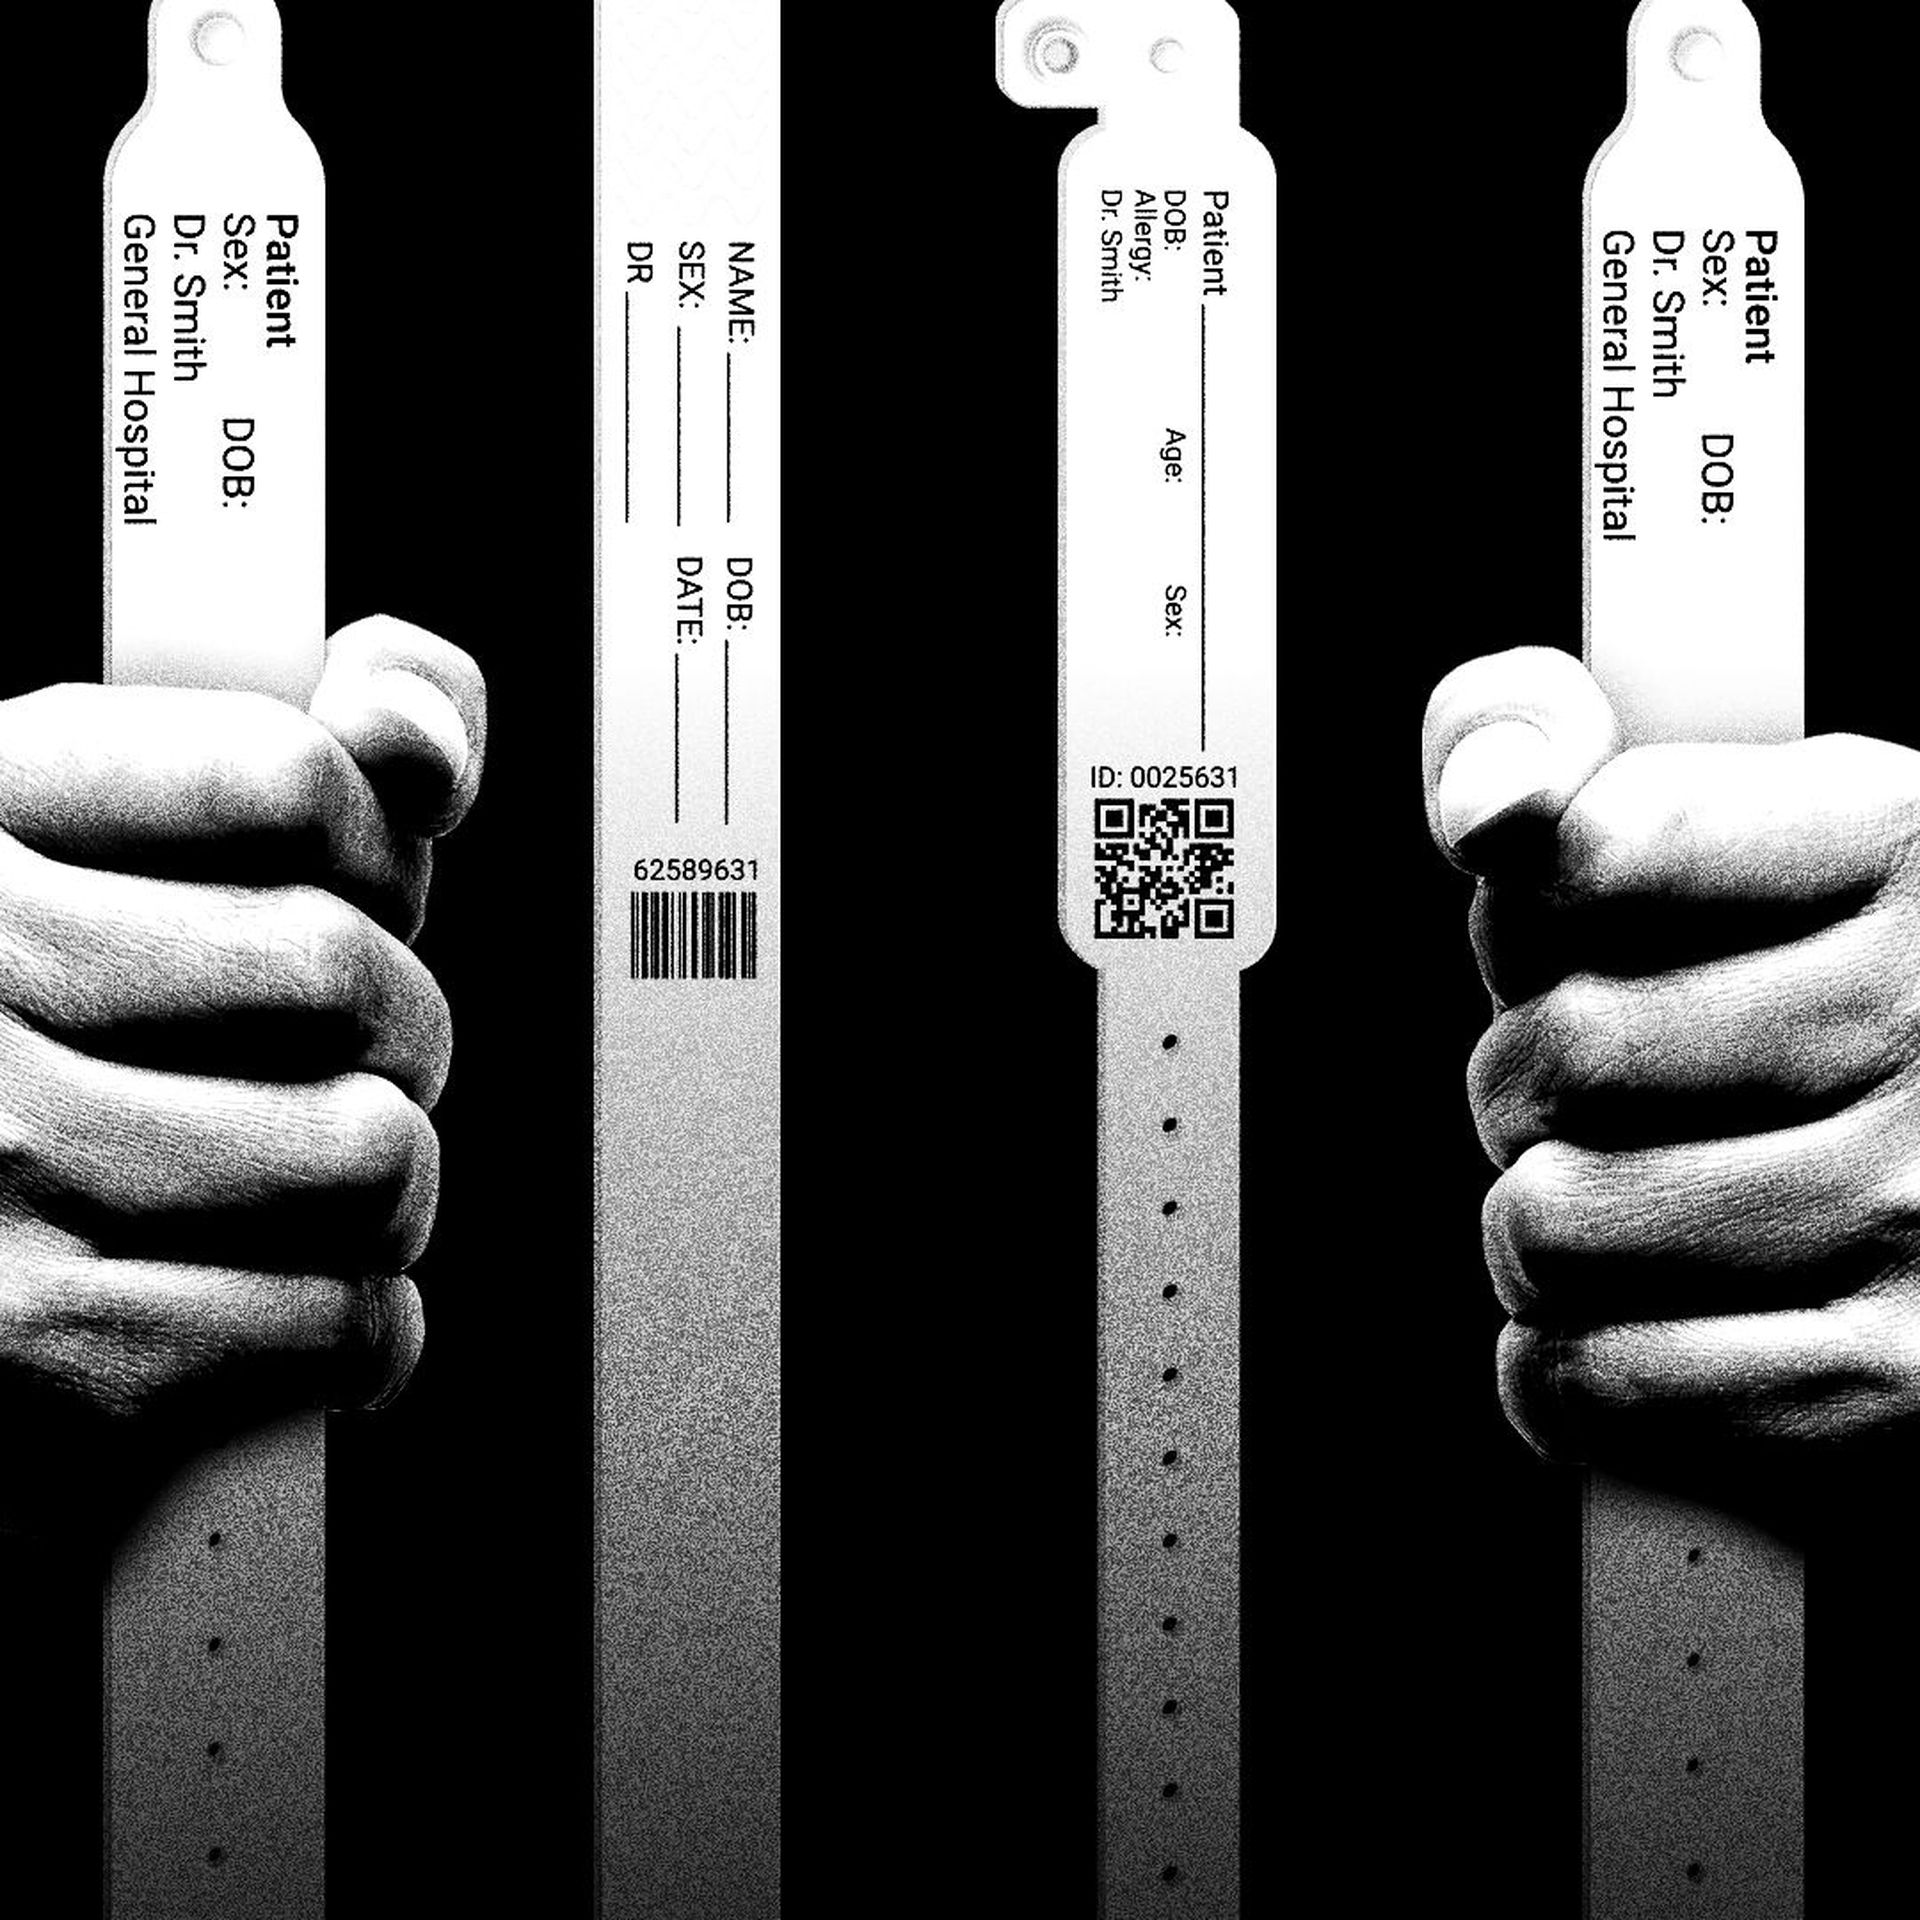 Illustration of hands holding jail bars made of medical wristbands.